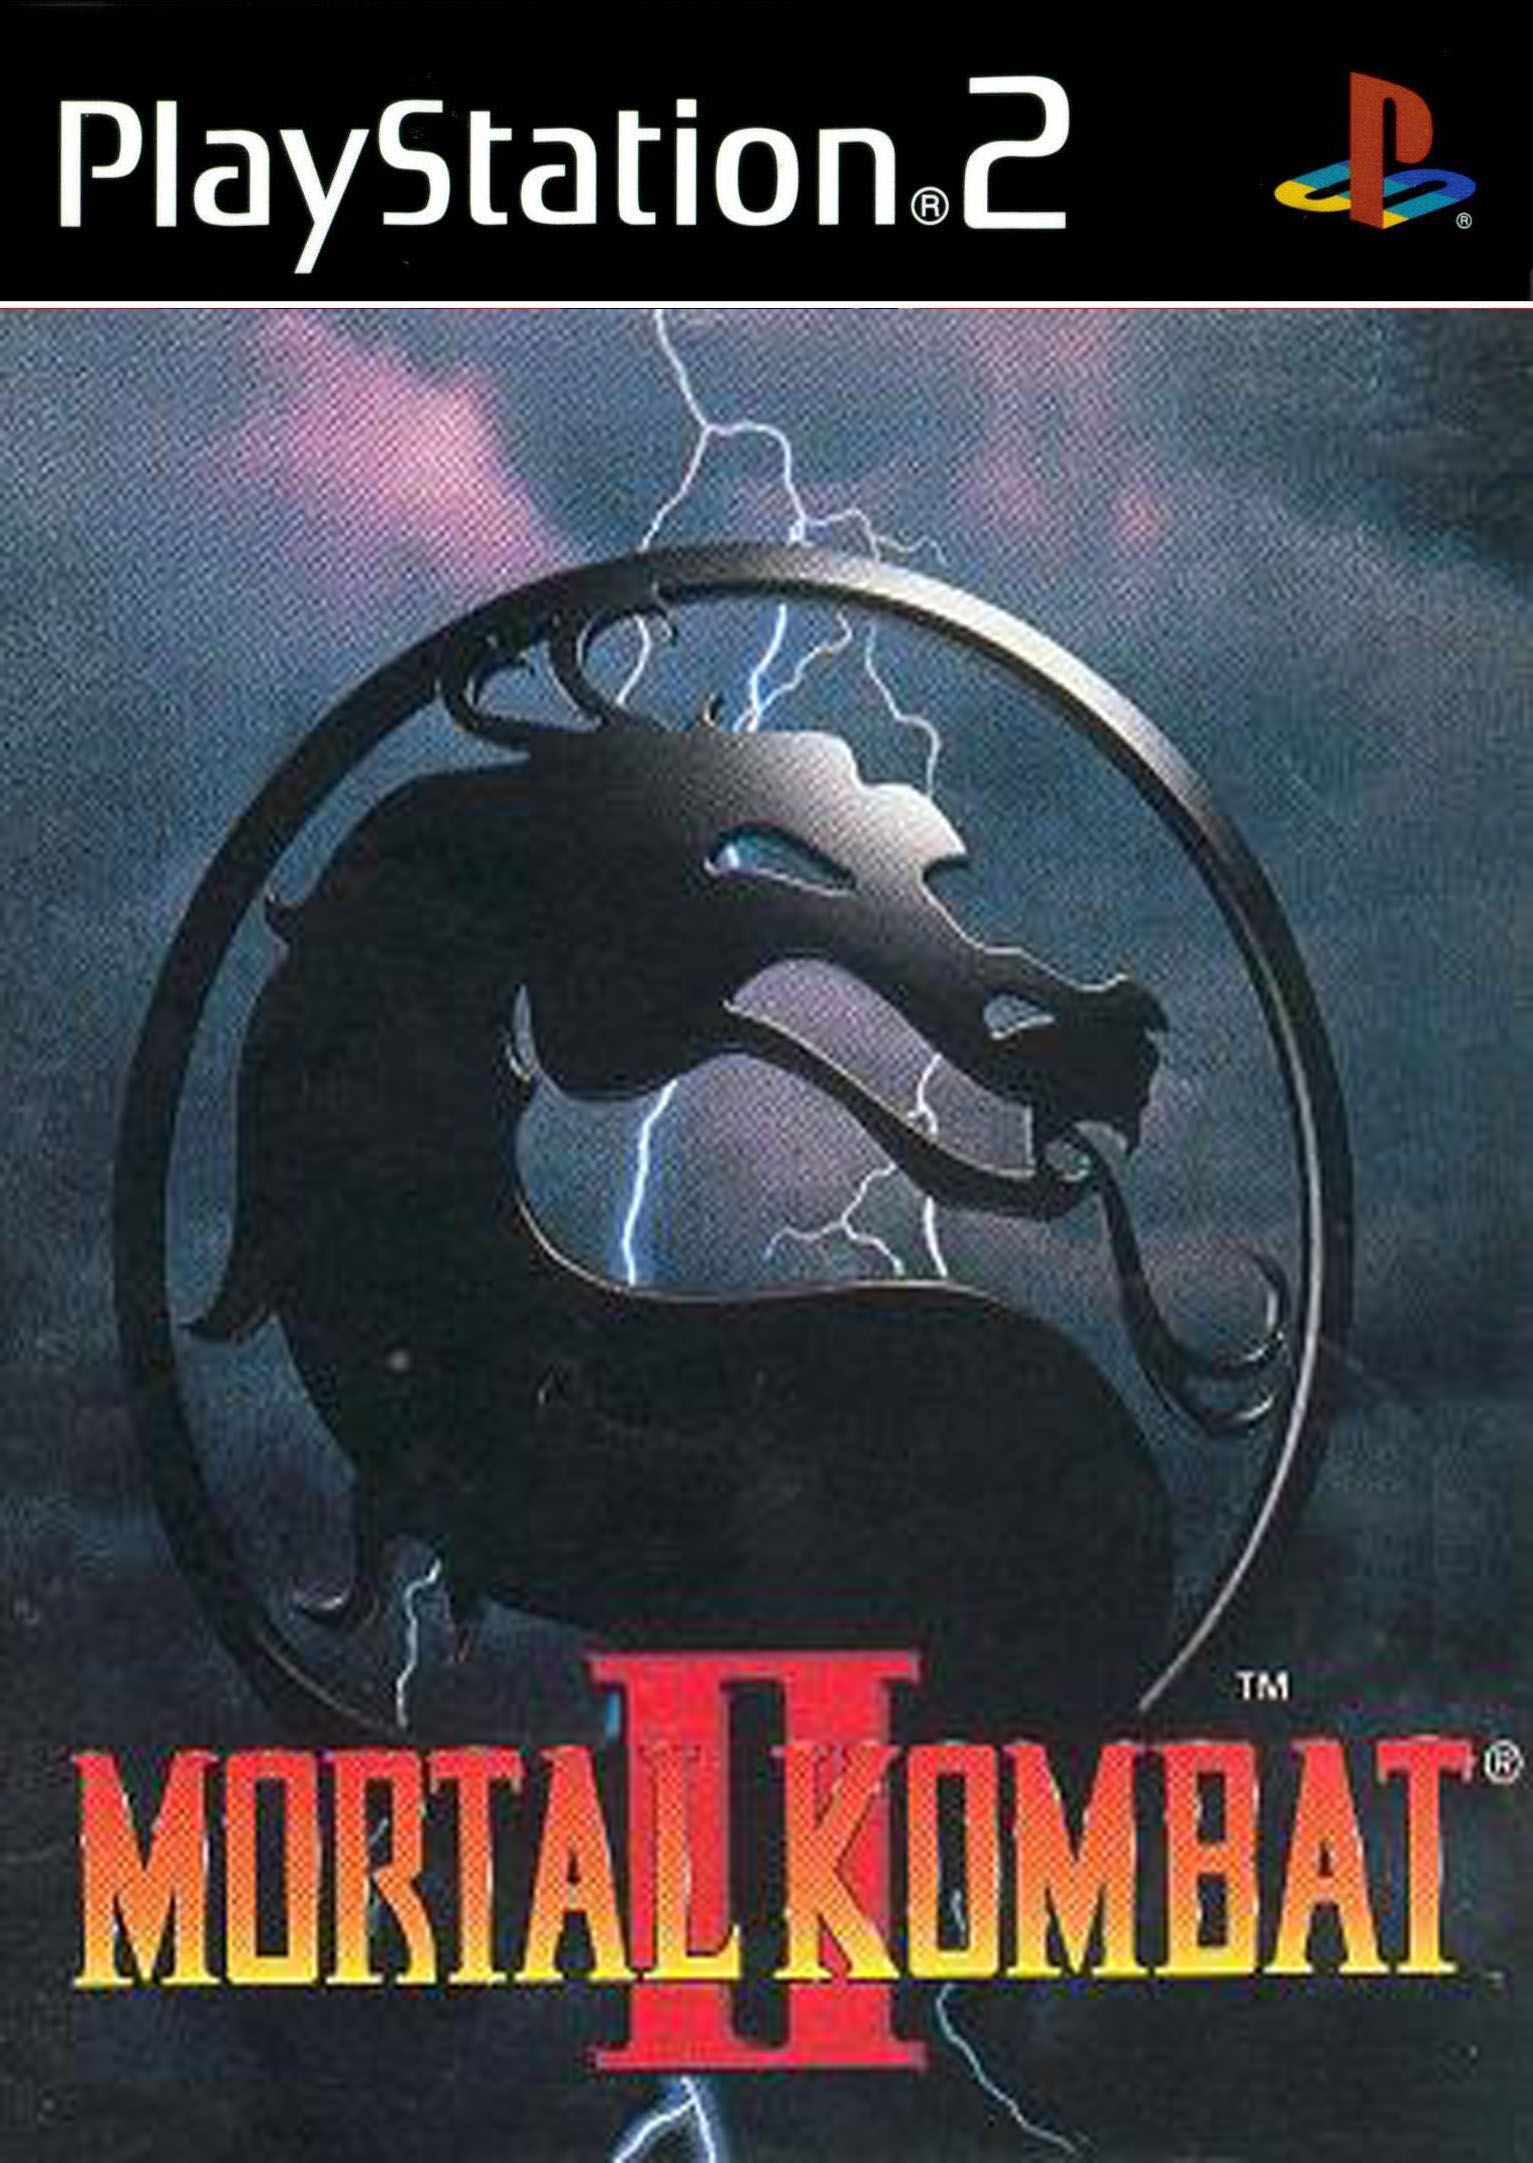 Mortal Kombat 2 (8530) (PS2)